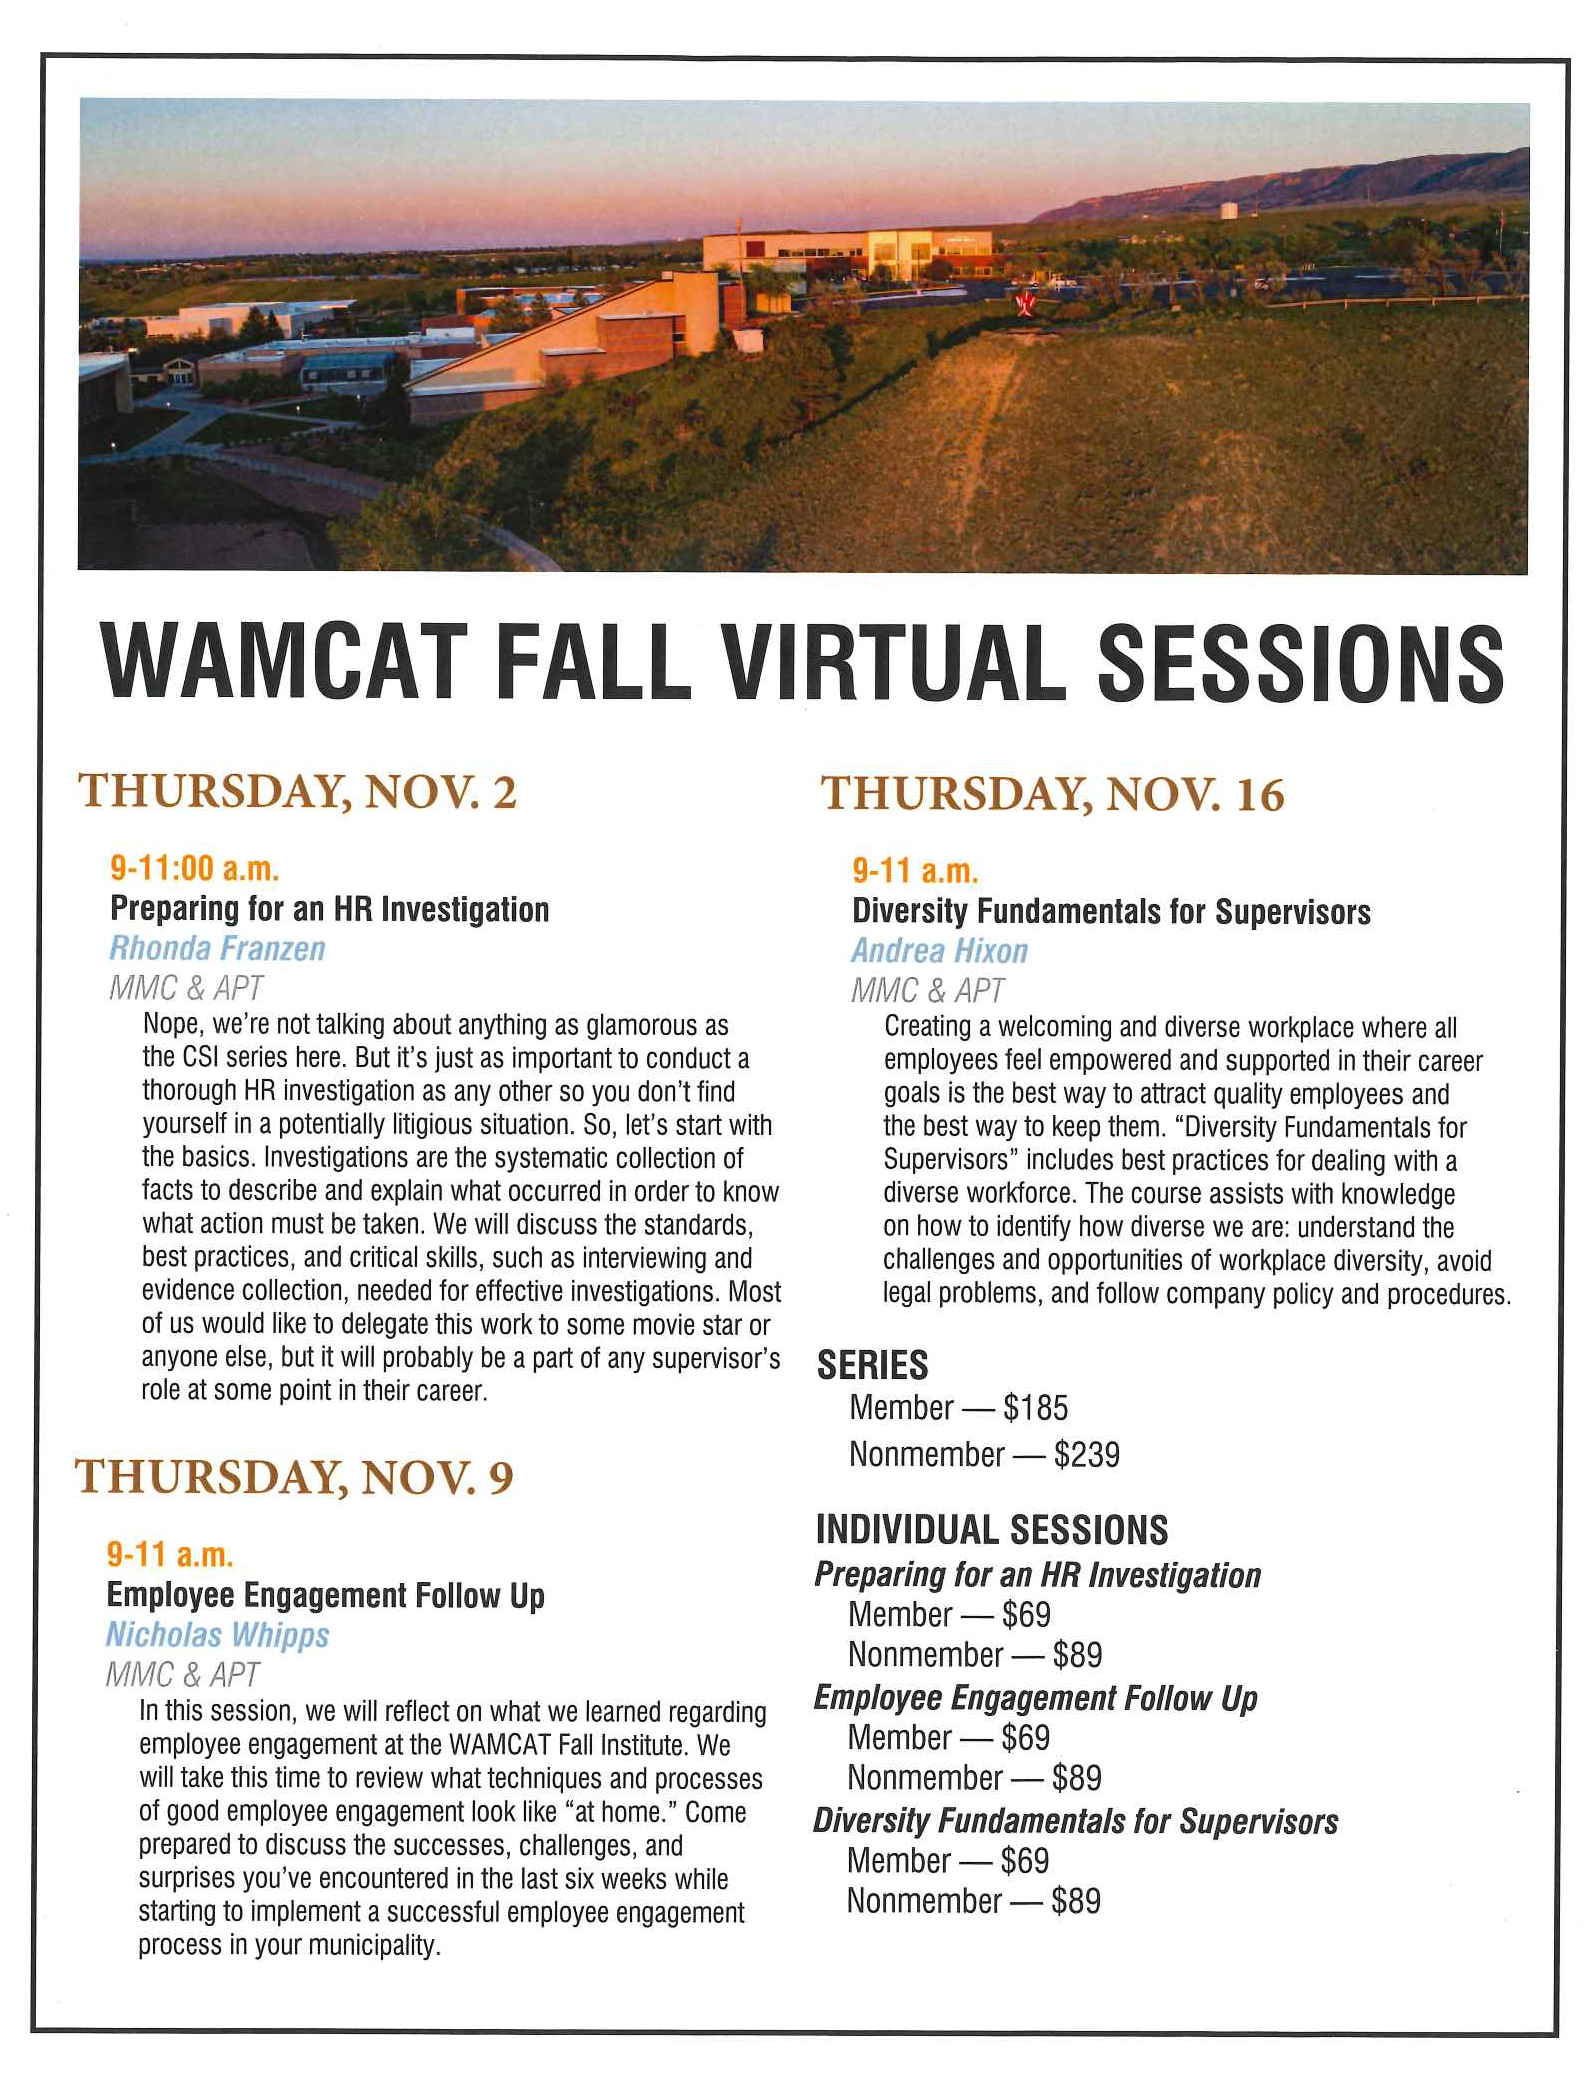 WAMCAT Virtual Fall Session